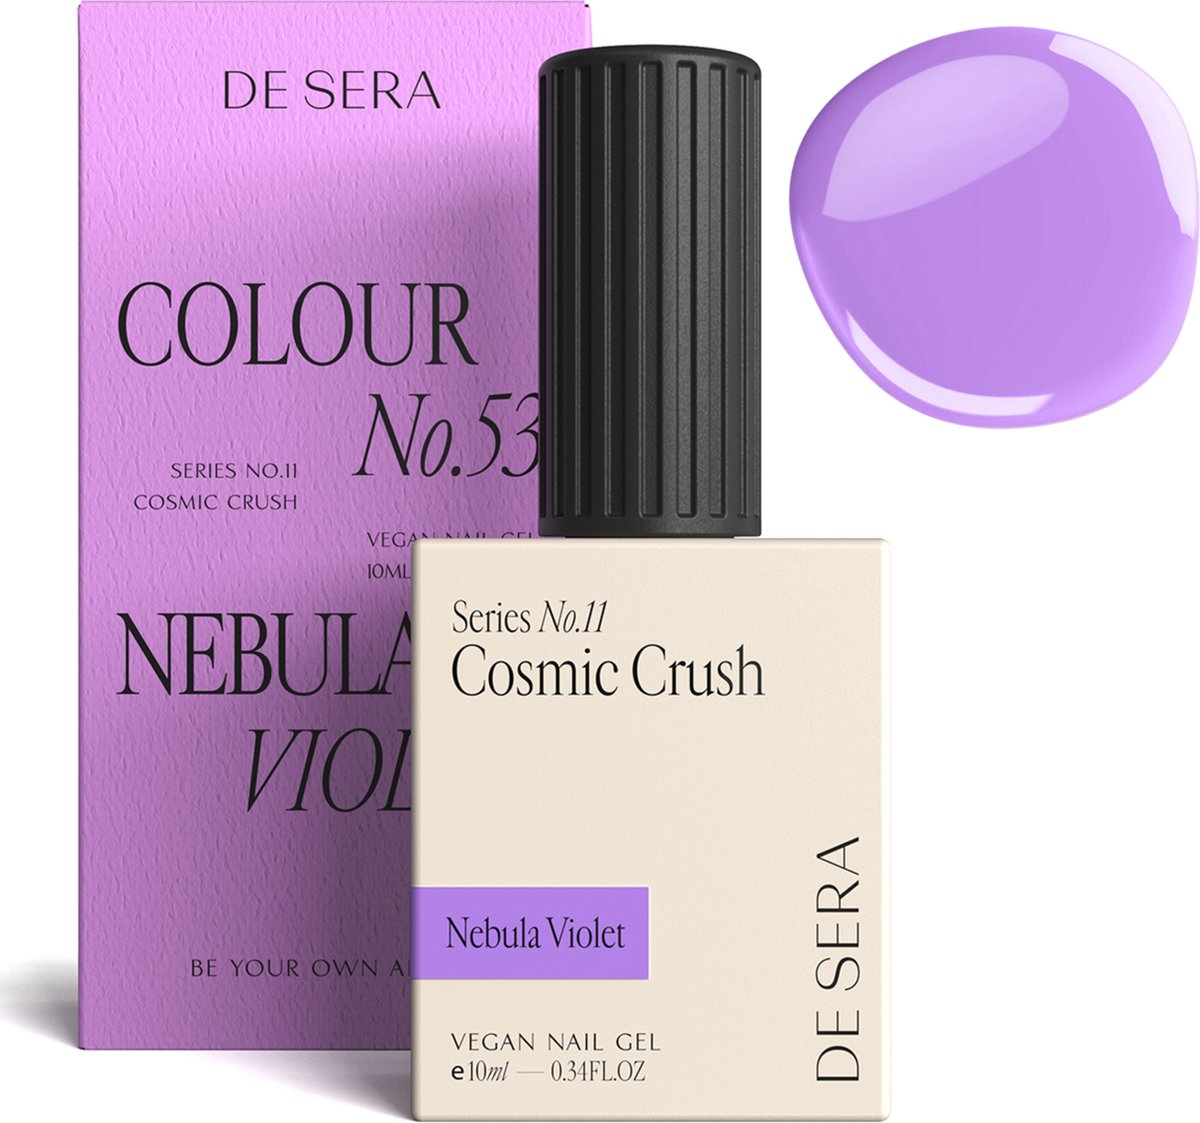 De Sera Gellak - Paarse Gel Nagellak - Paars - 10ML - Colour No. 53 Nebula Violet - De Sera